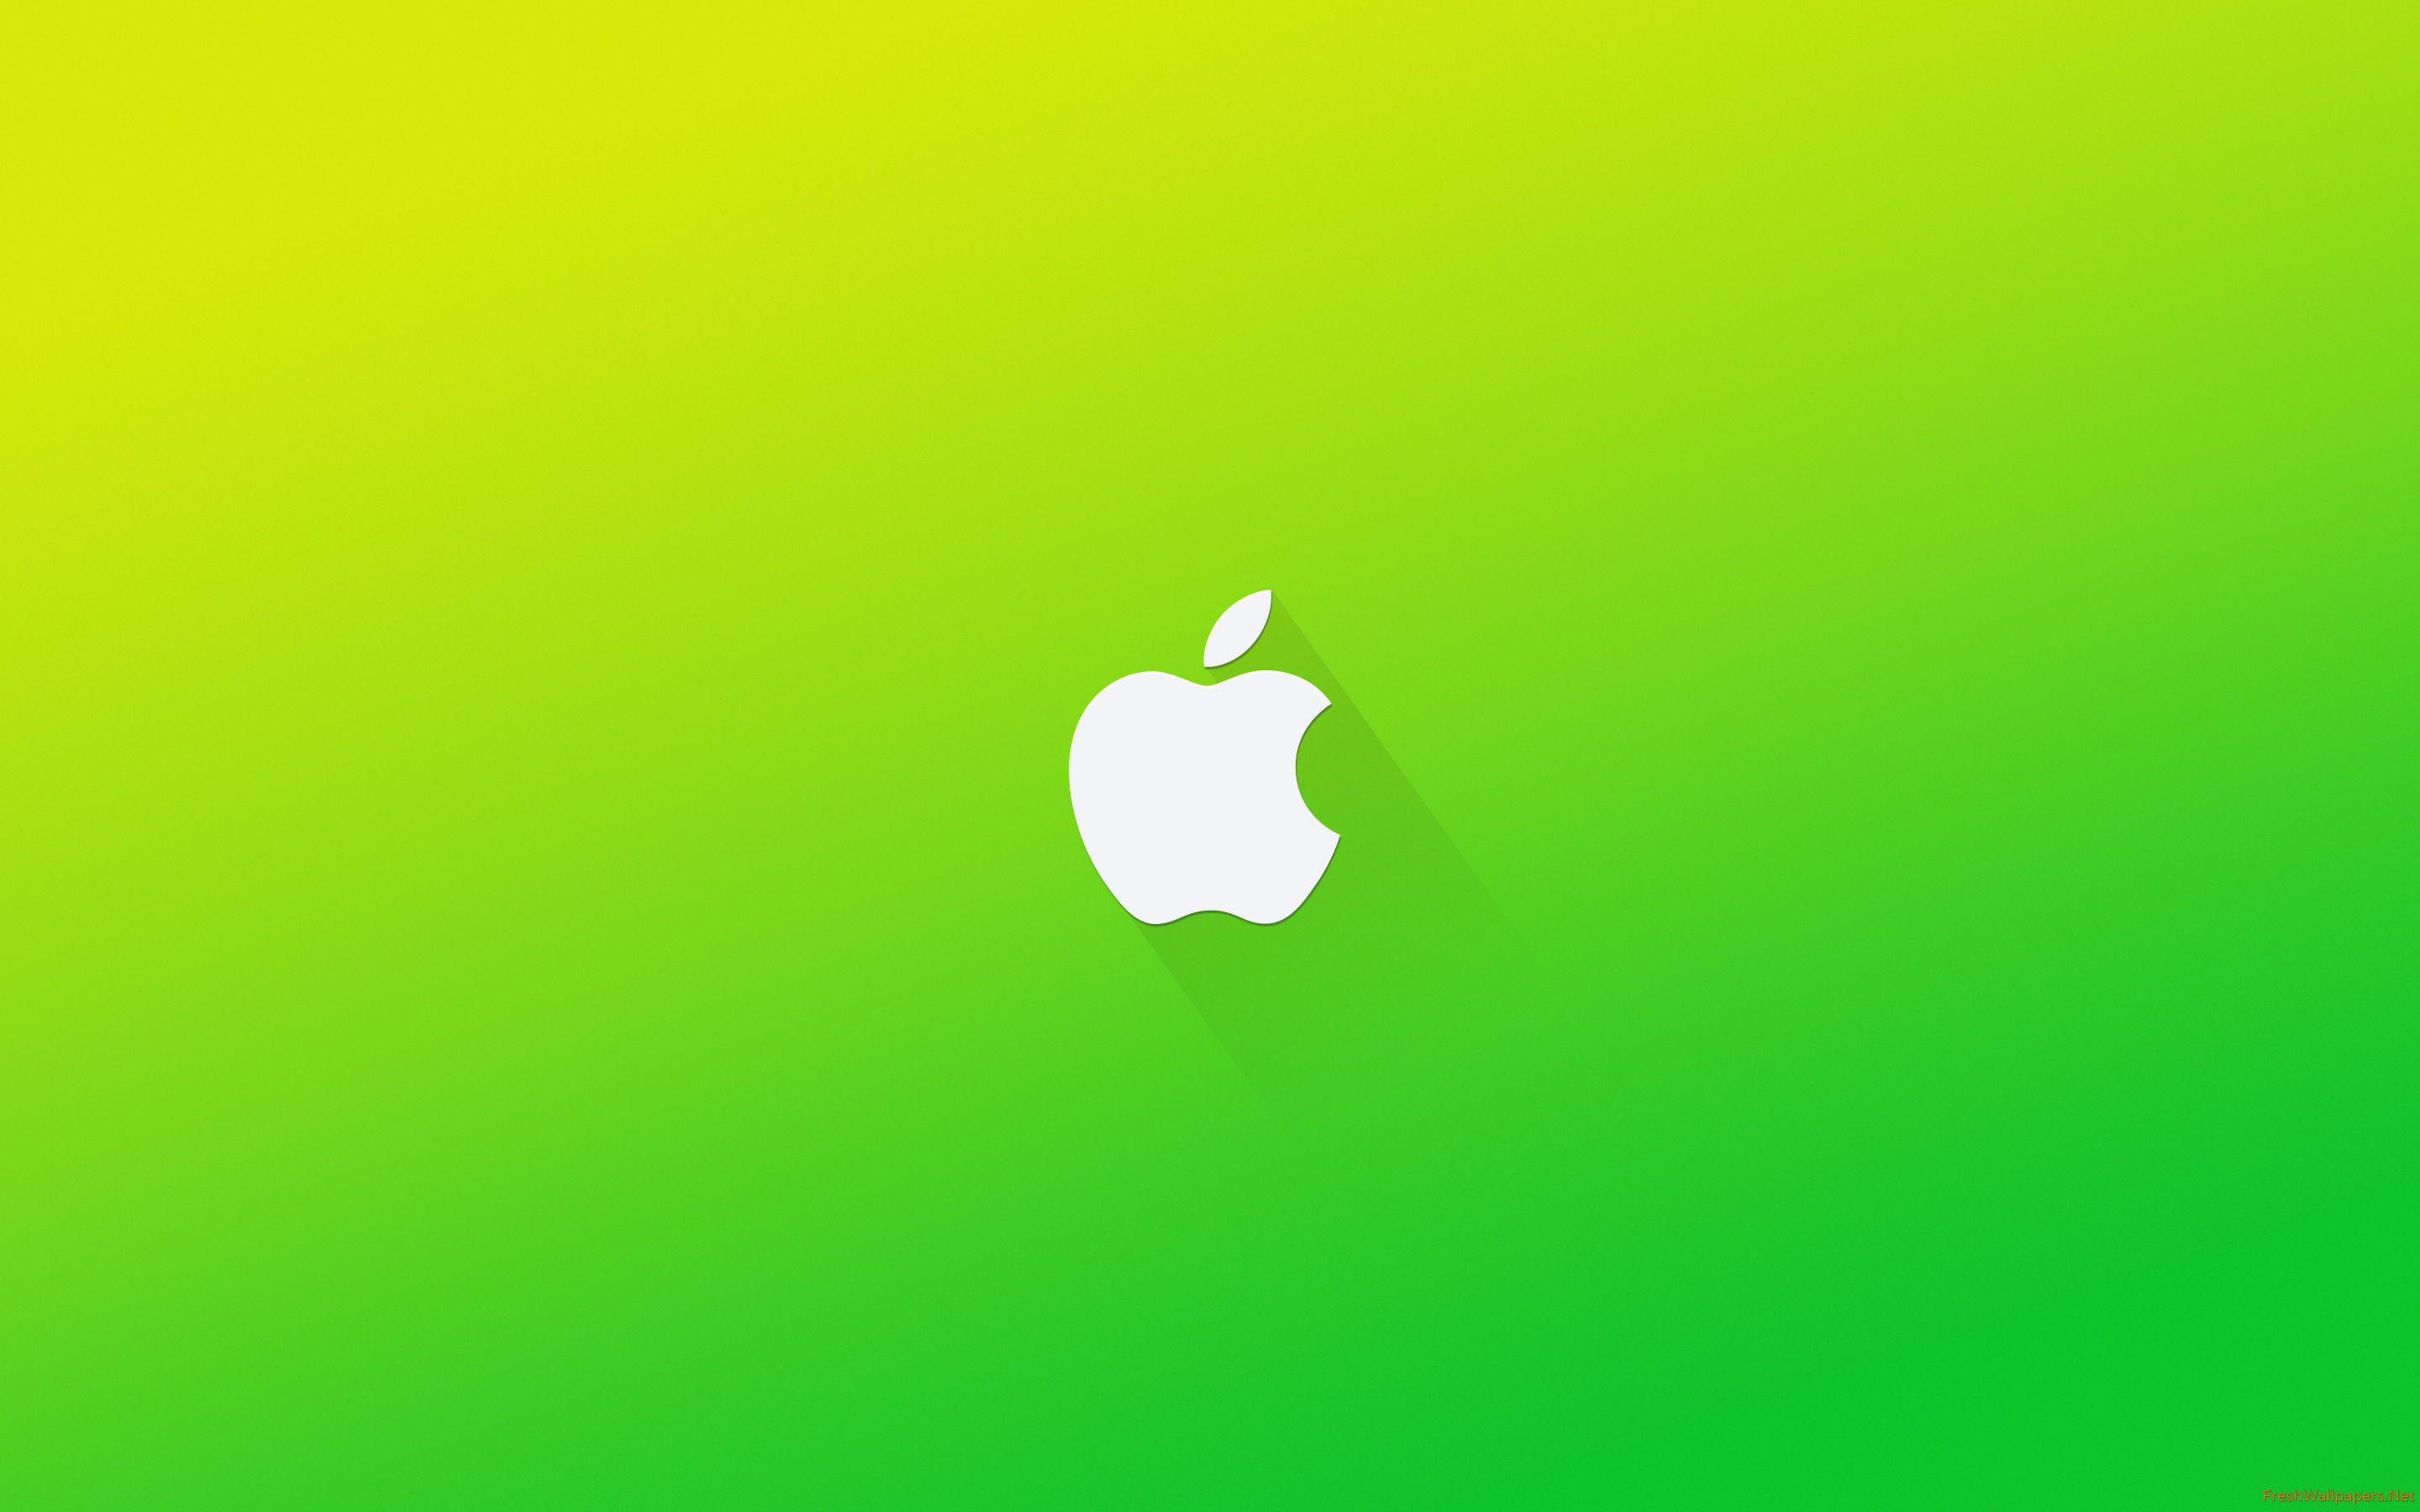 Apple Green Logo - Apple Green Logo wallpapers | Freshwallpapers